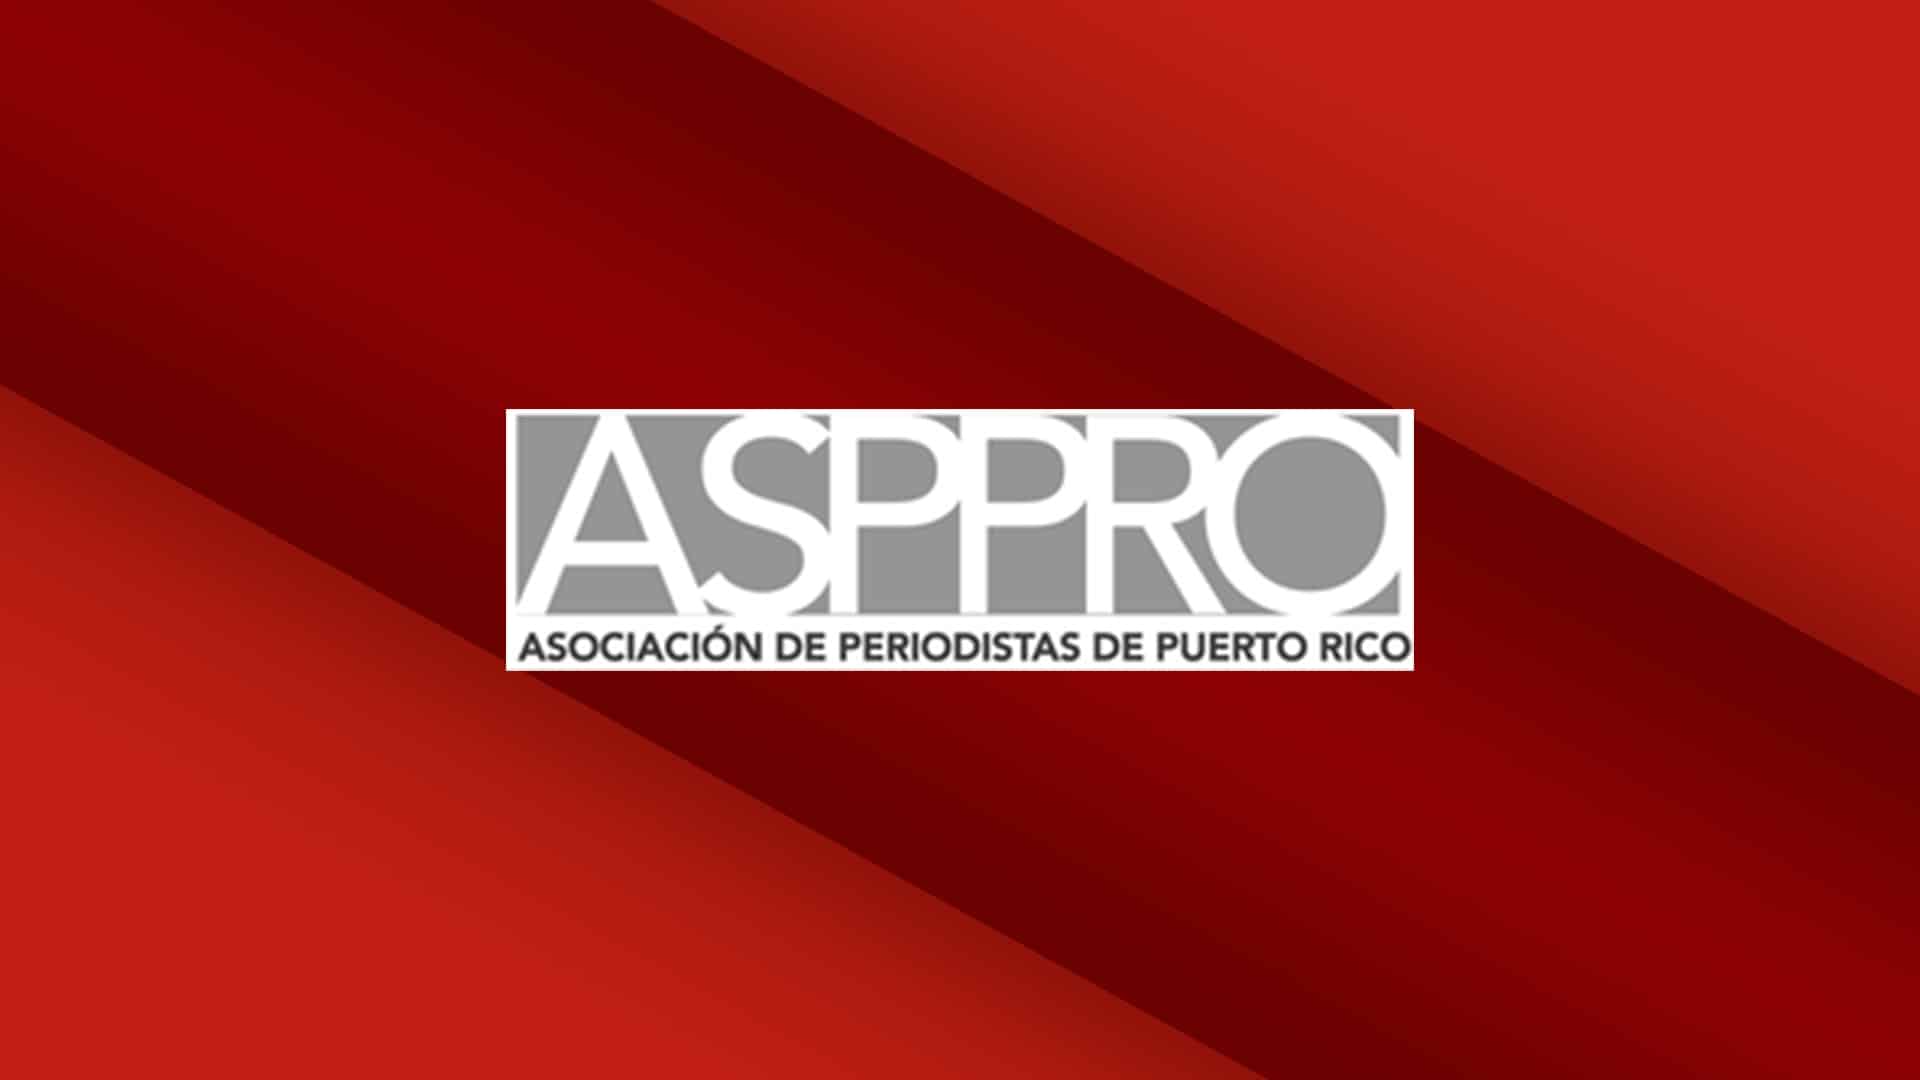 Asppro repudia que funcionarios sigan coartando libertad de expresión de empleados que dan datos a periodistas